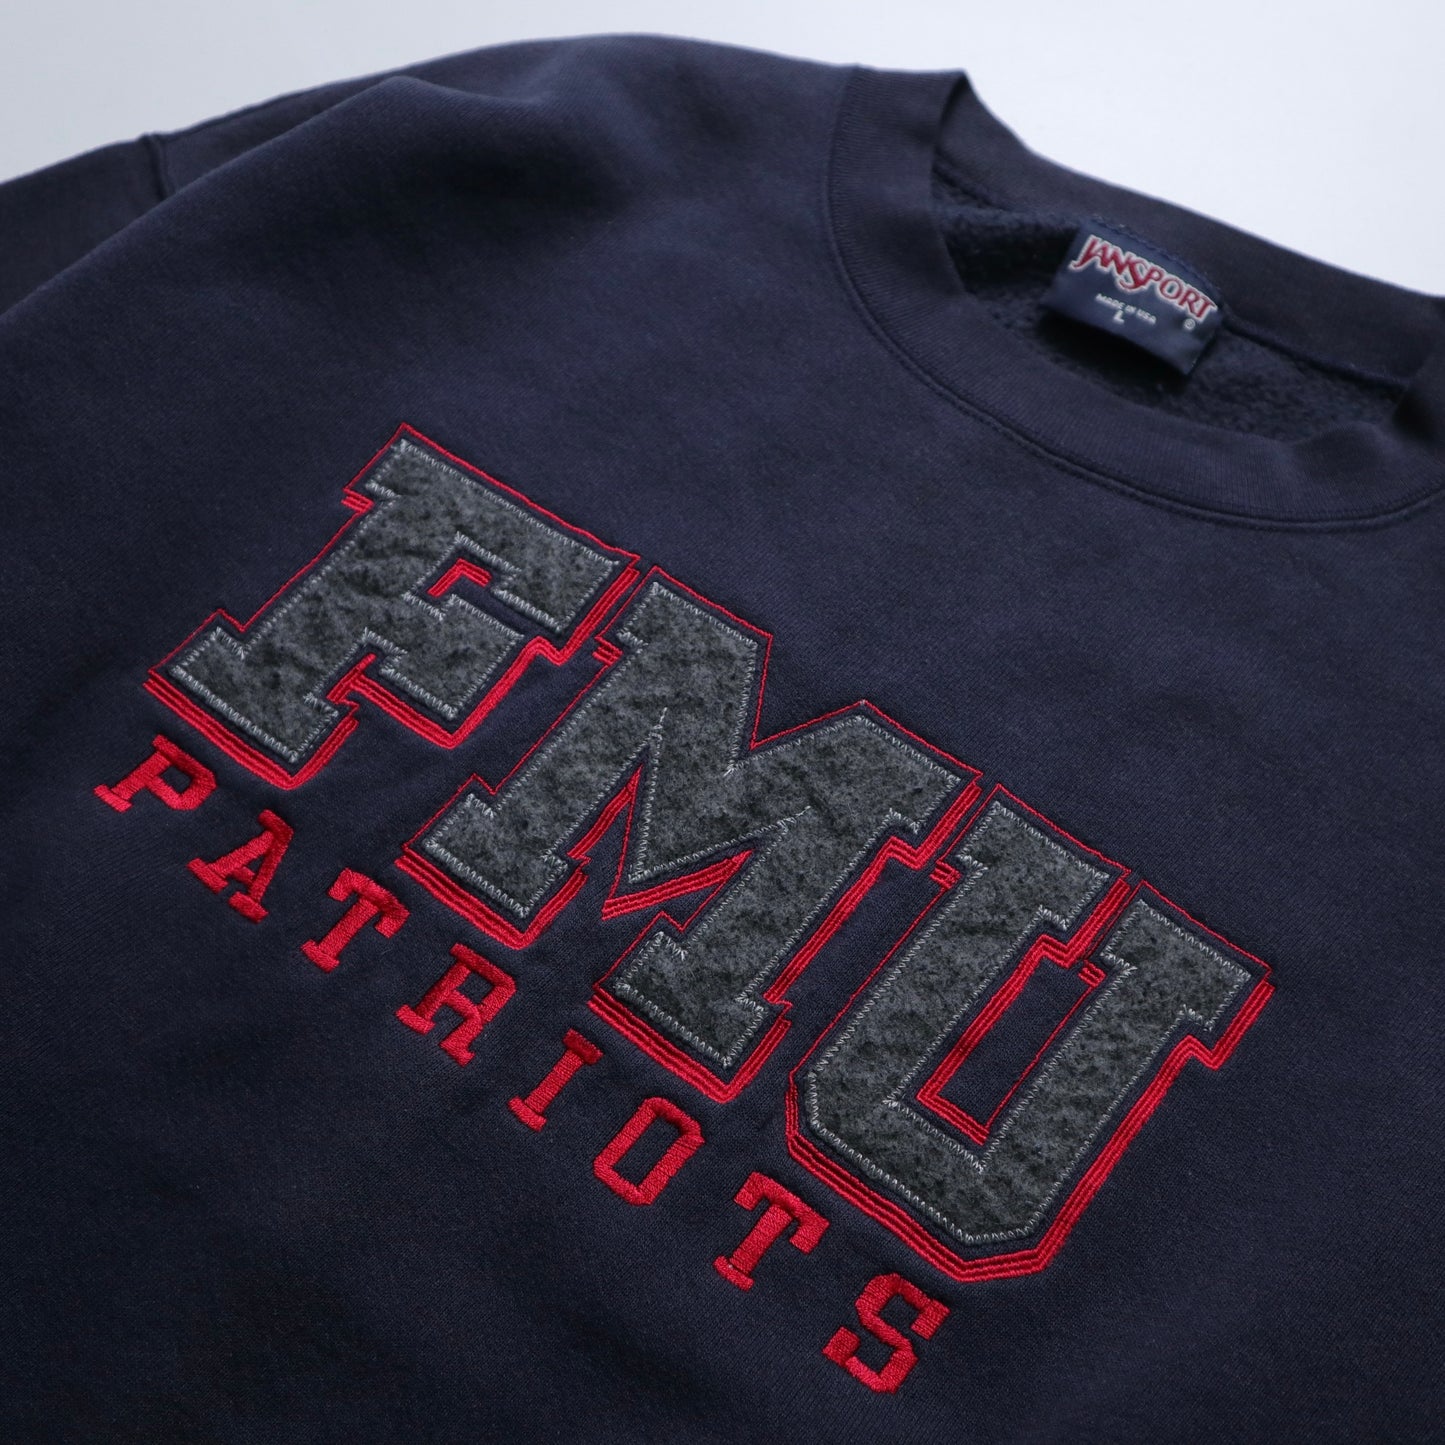 90s Jansport American-made FMU university tee